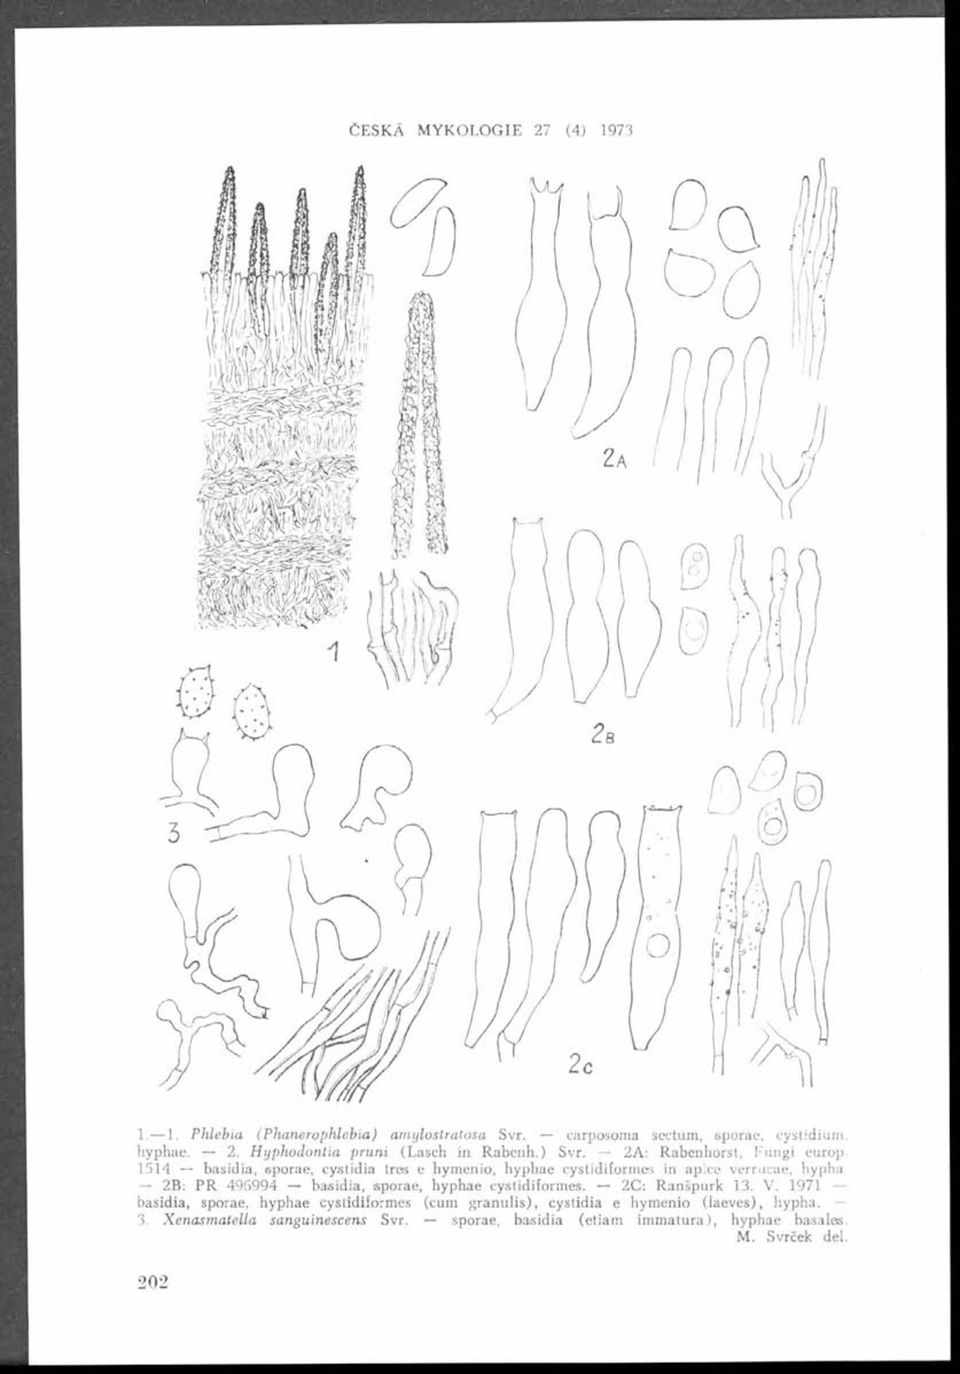 2C : Ranšpurk 13. V. 1971 - basidia, sporae, hyphae cystidiformes (cum granu lis), cystidia e hymenio (laeves), hypha. 3.